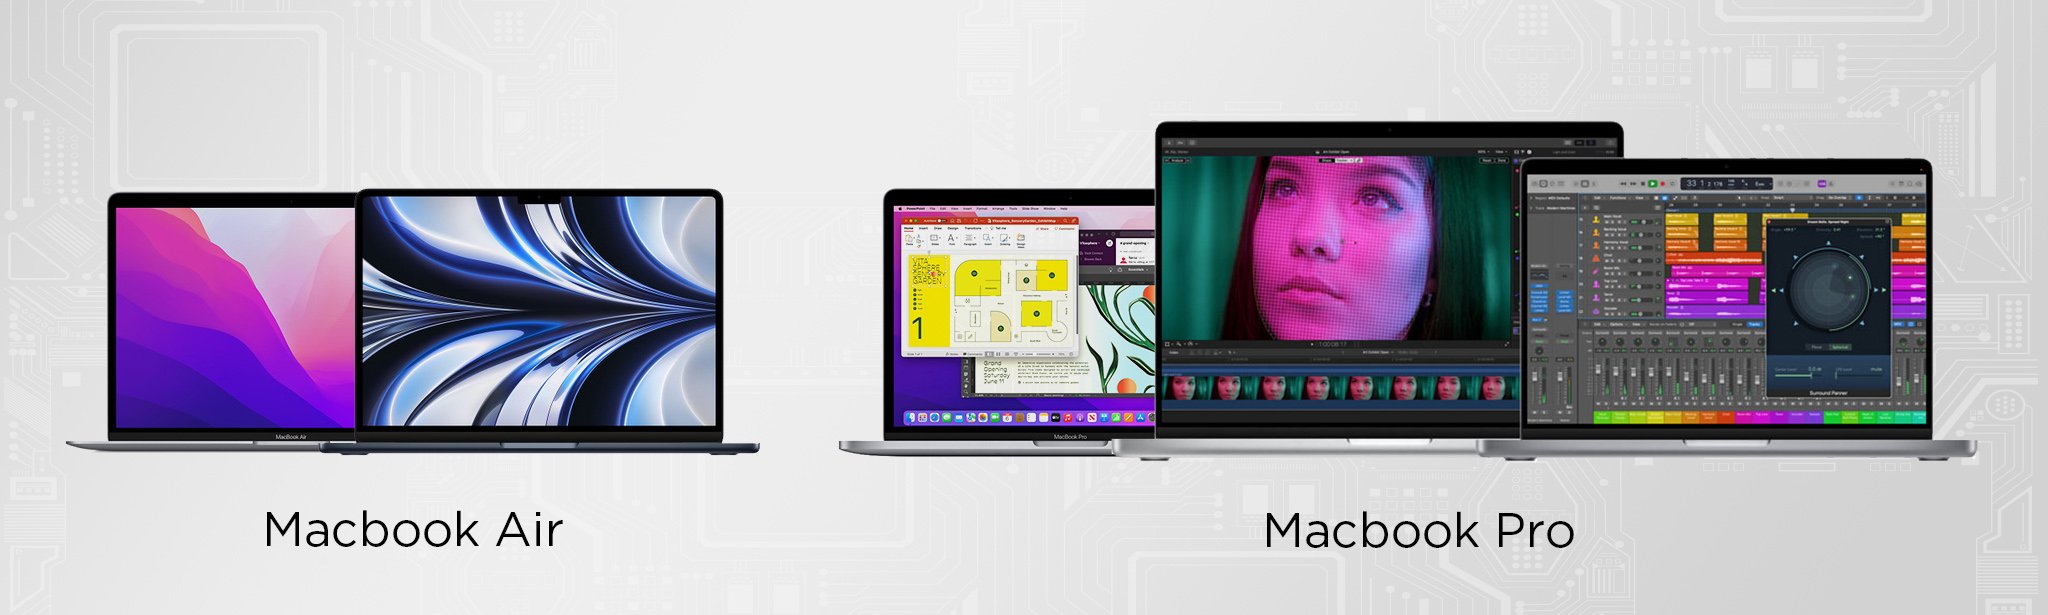 Macbook Air and Macbook Pro Variants